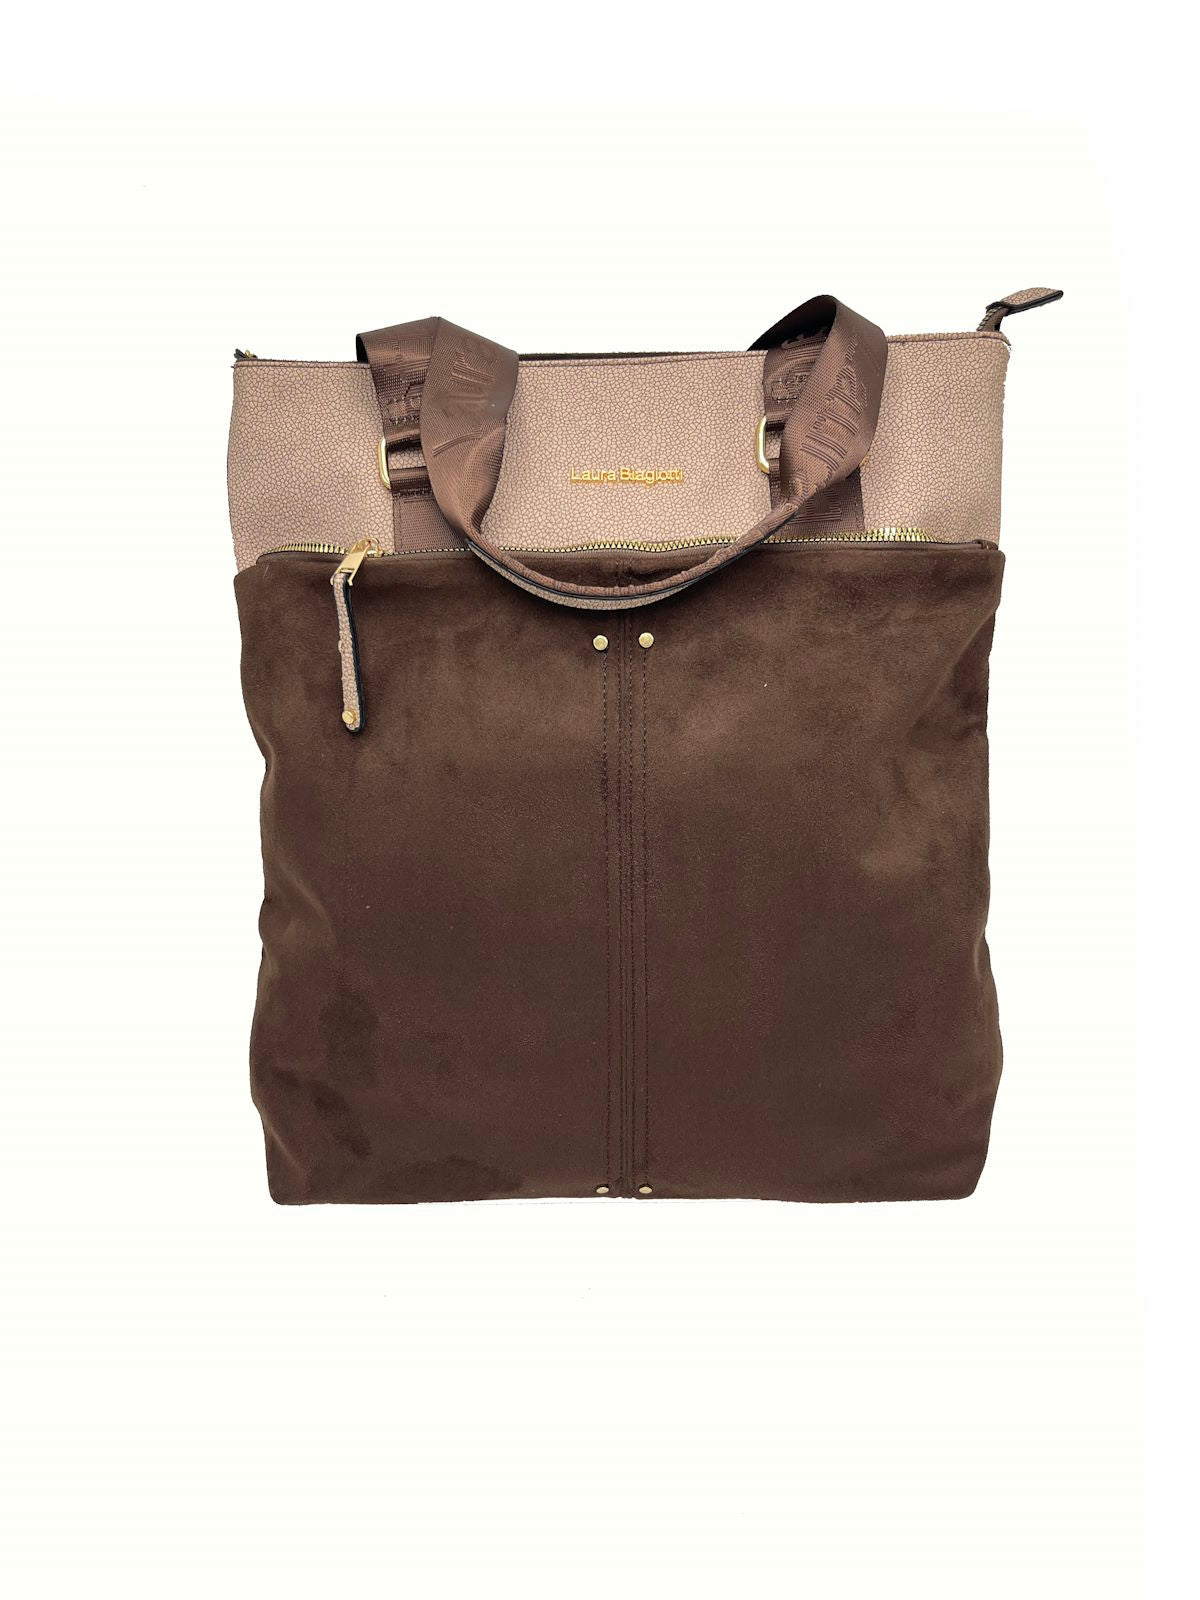 Eco leather backpack, brand Laura Biagiotti, art. LB102-6